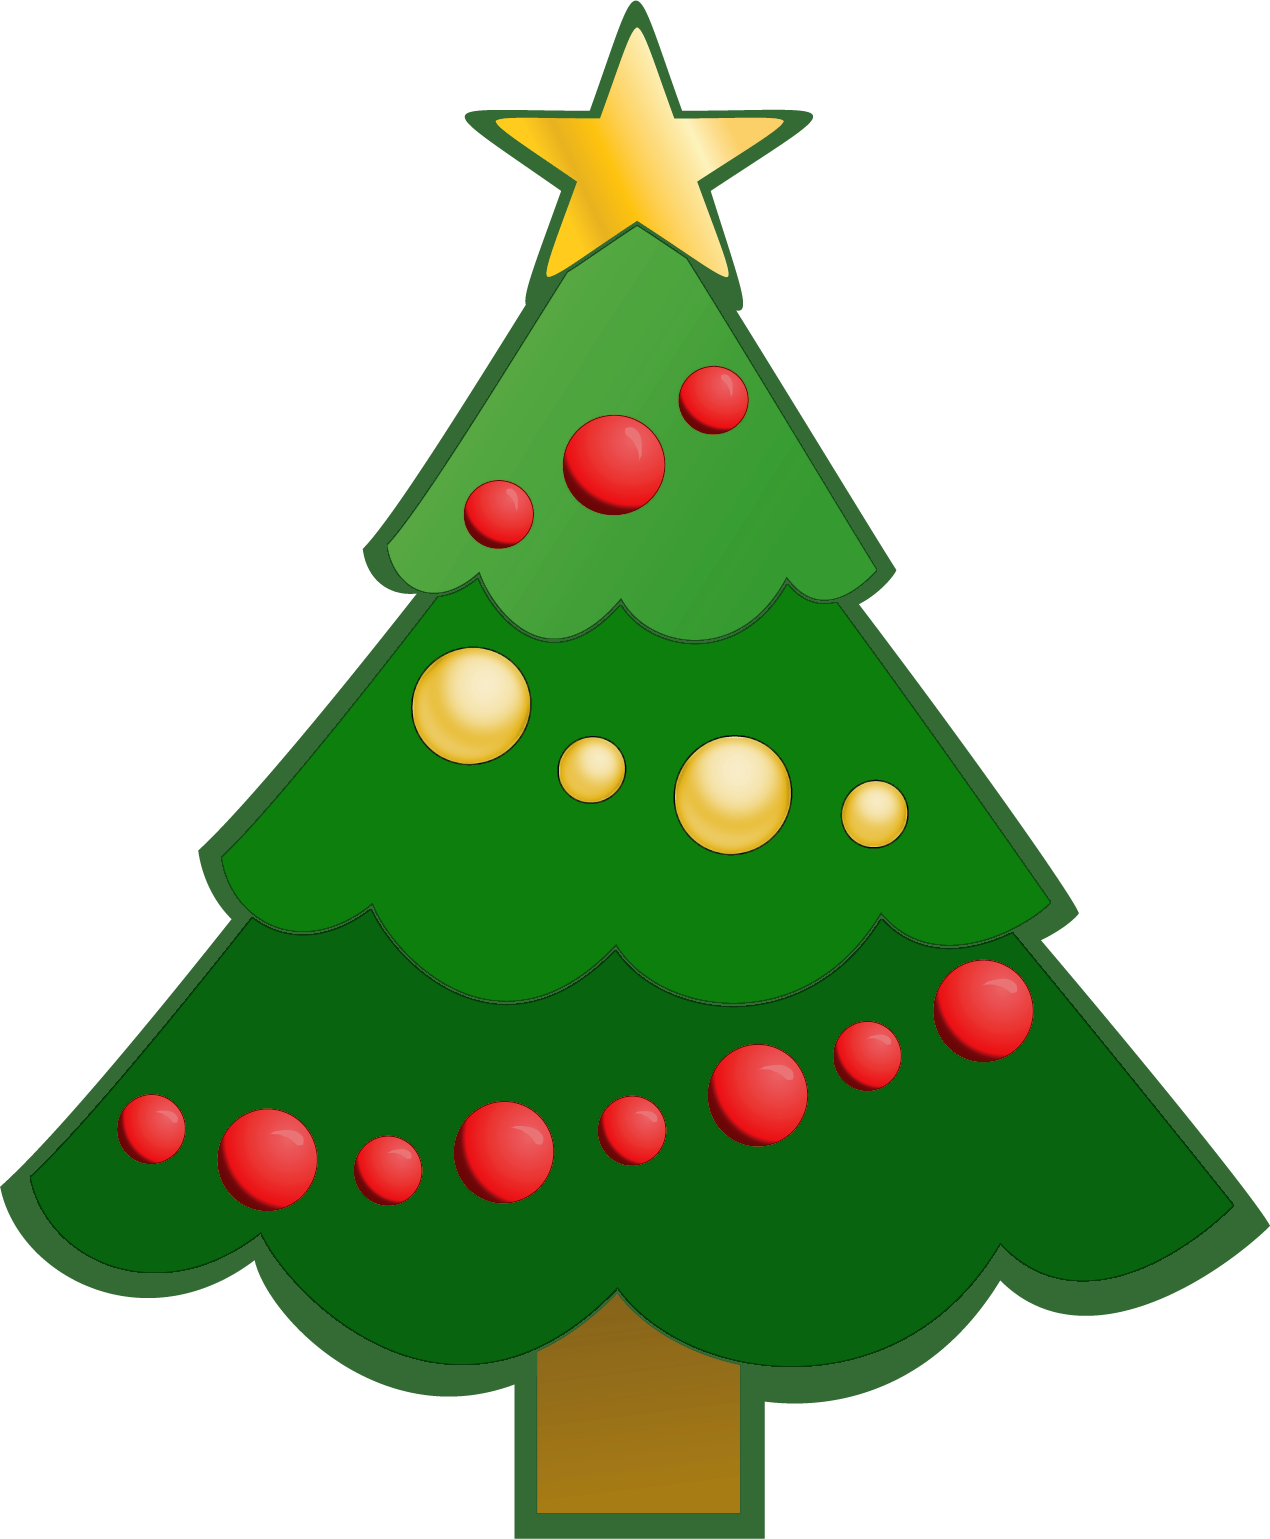 Free Christmas Tree Art, Download Free Christmas Tree Art png images